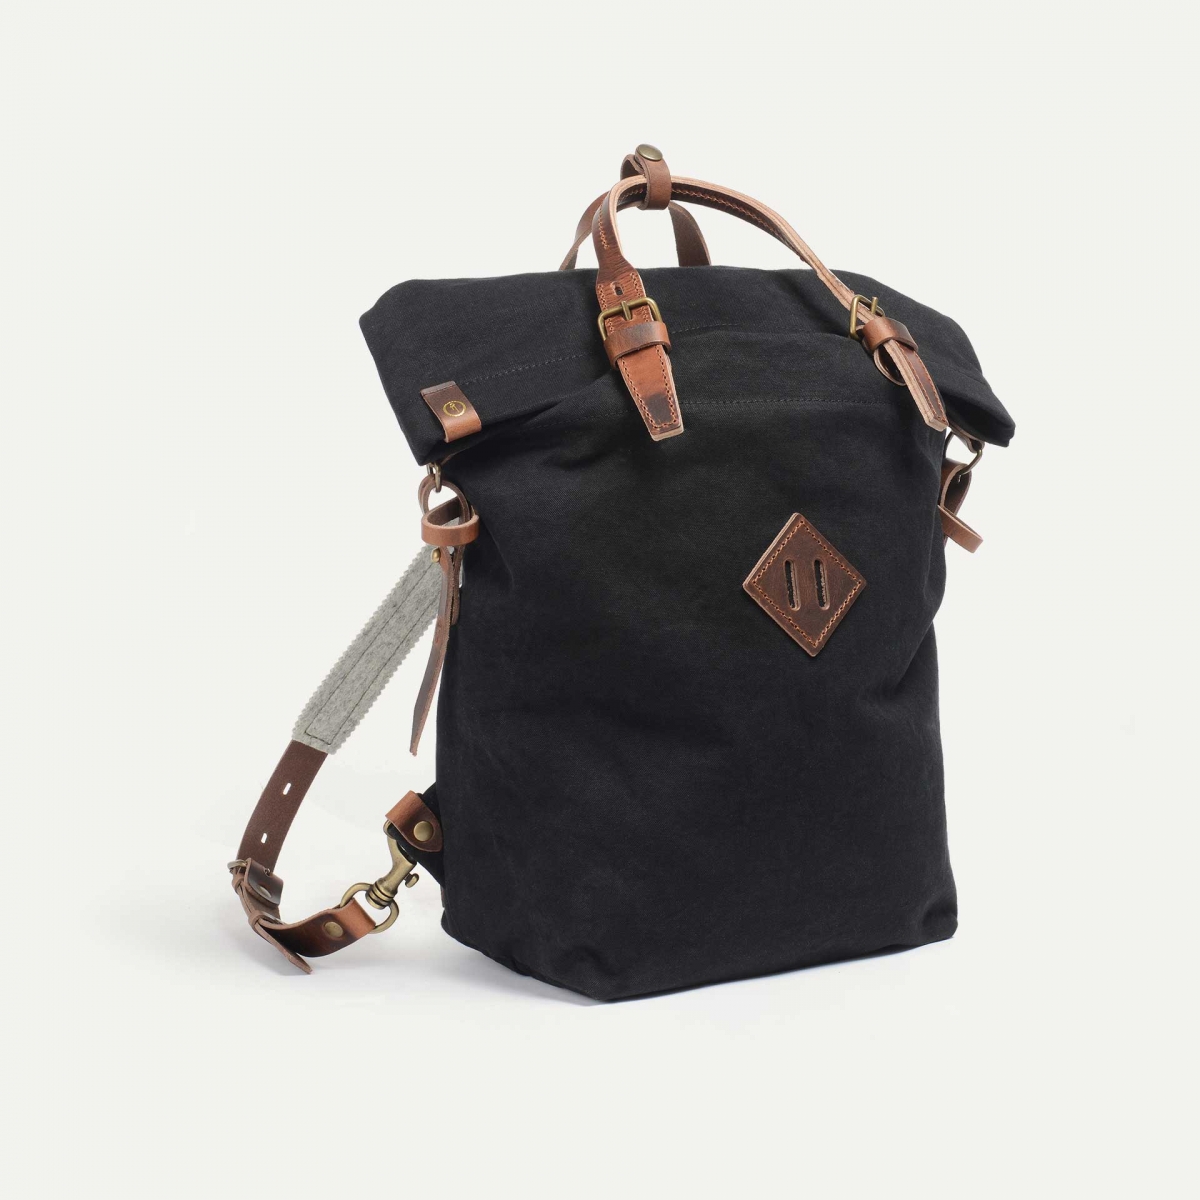 25L Woody backpack - Black stonewashed (image n°2)